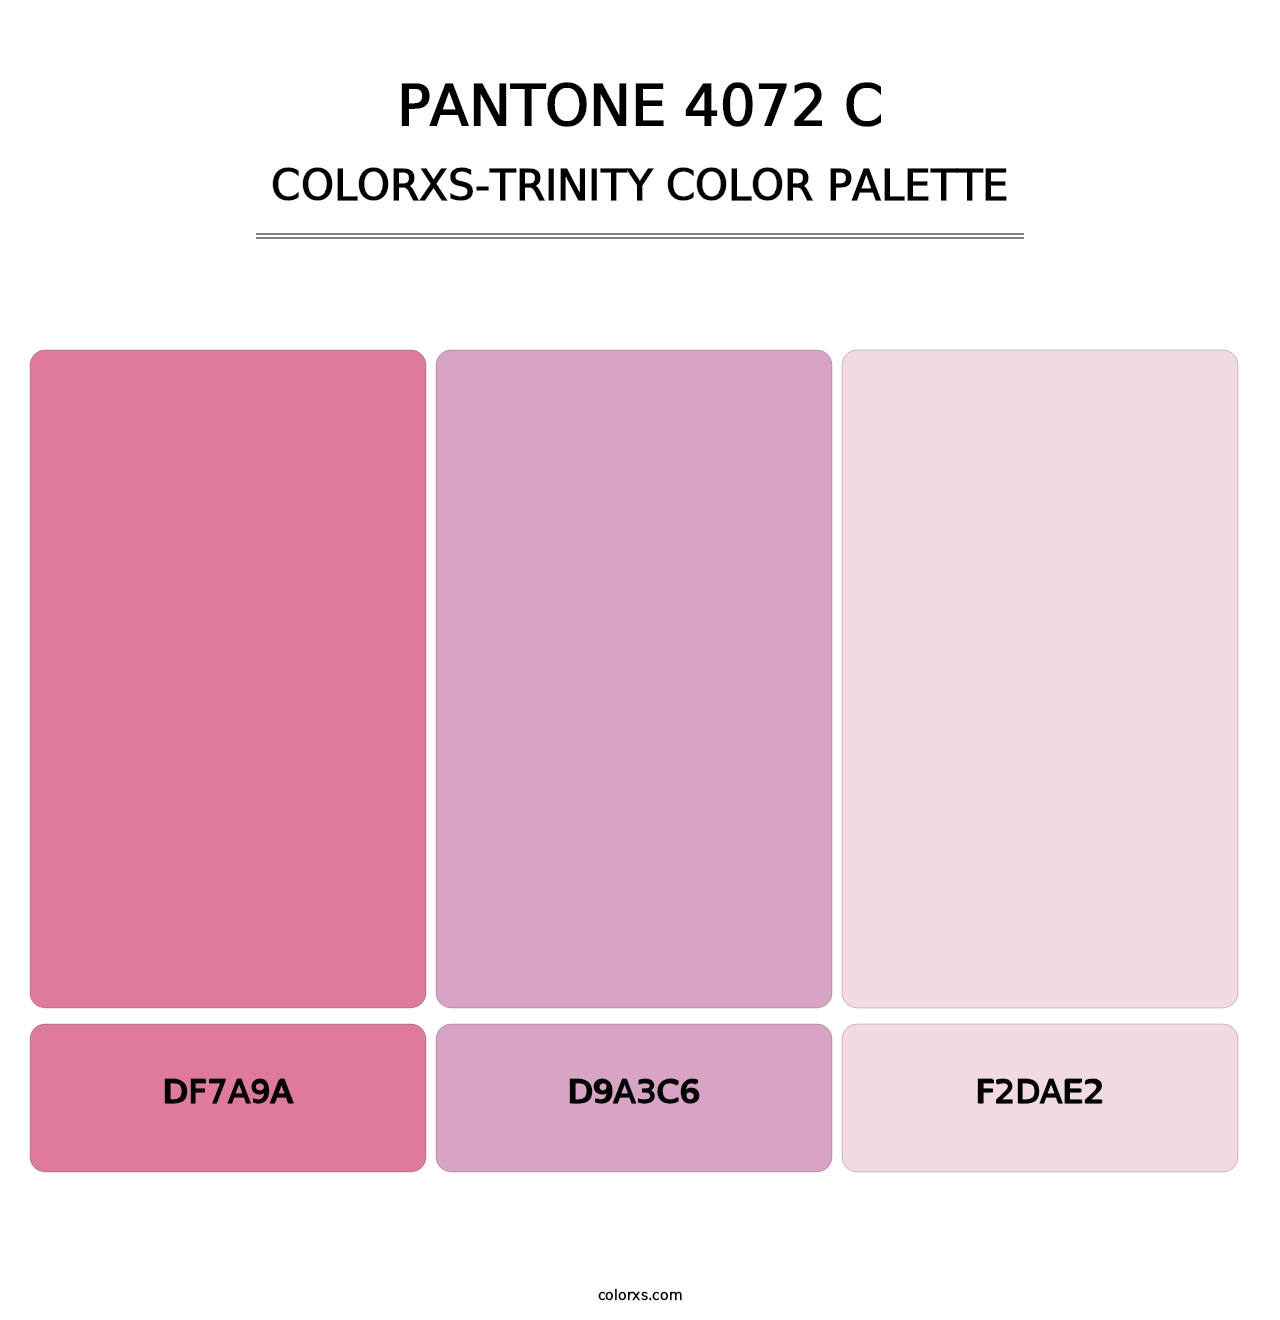 PANTONE 4072 C - Colorxs Trinity Palette